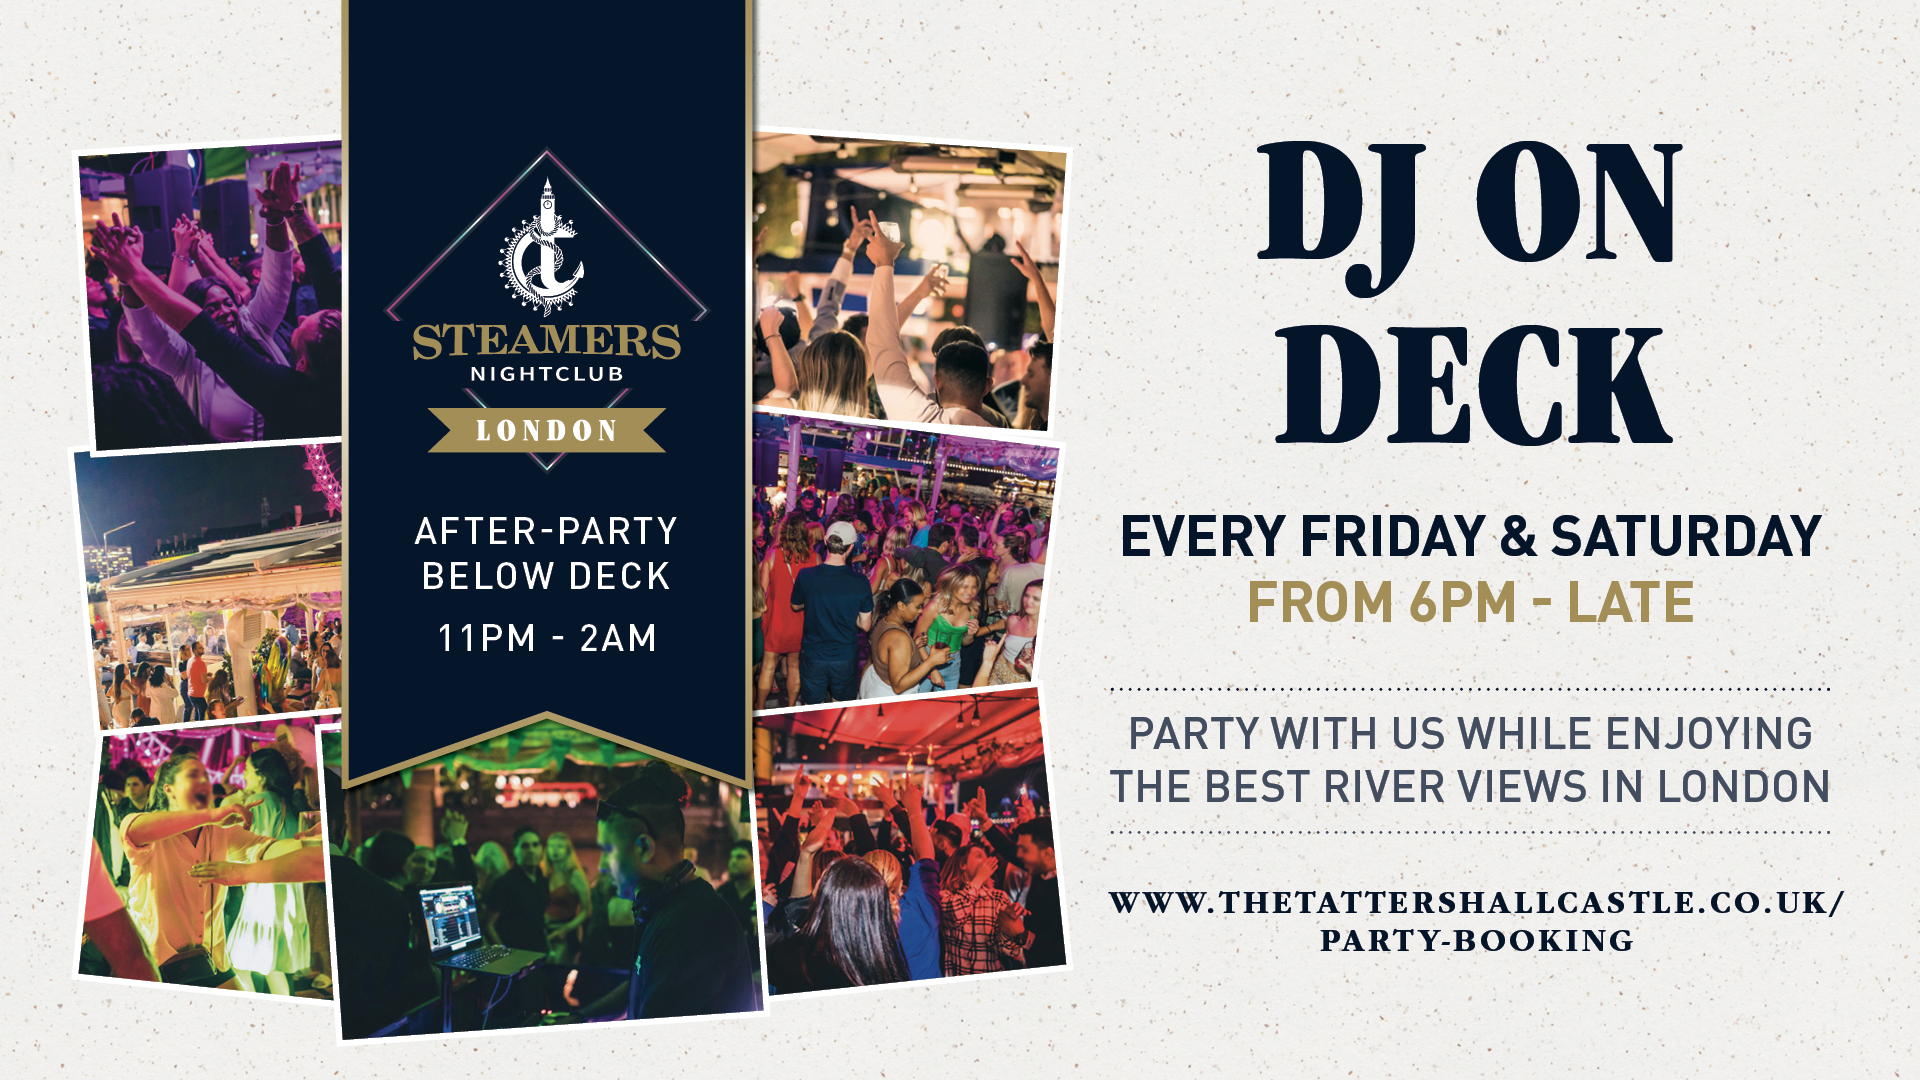 DJ on Deck every Friday